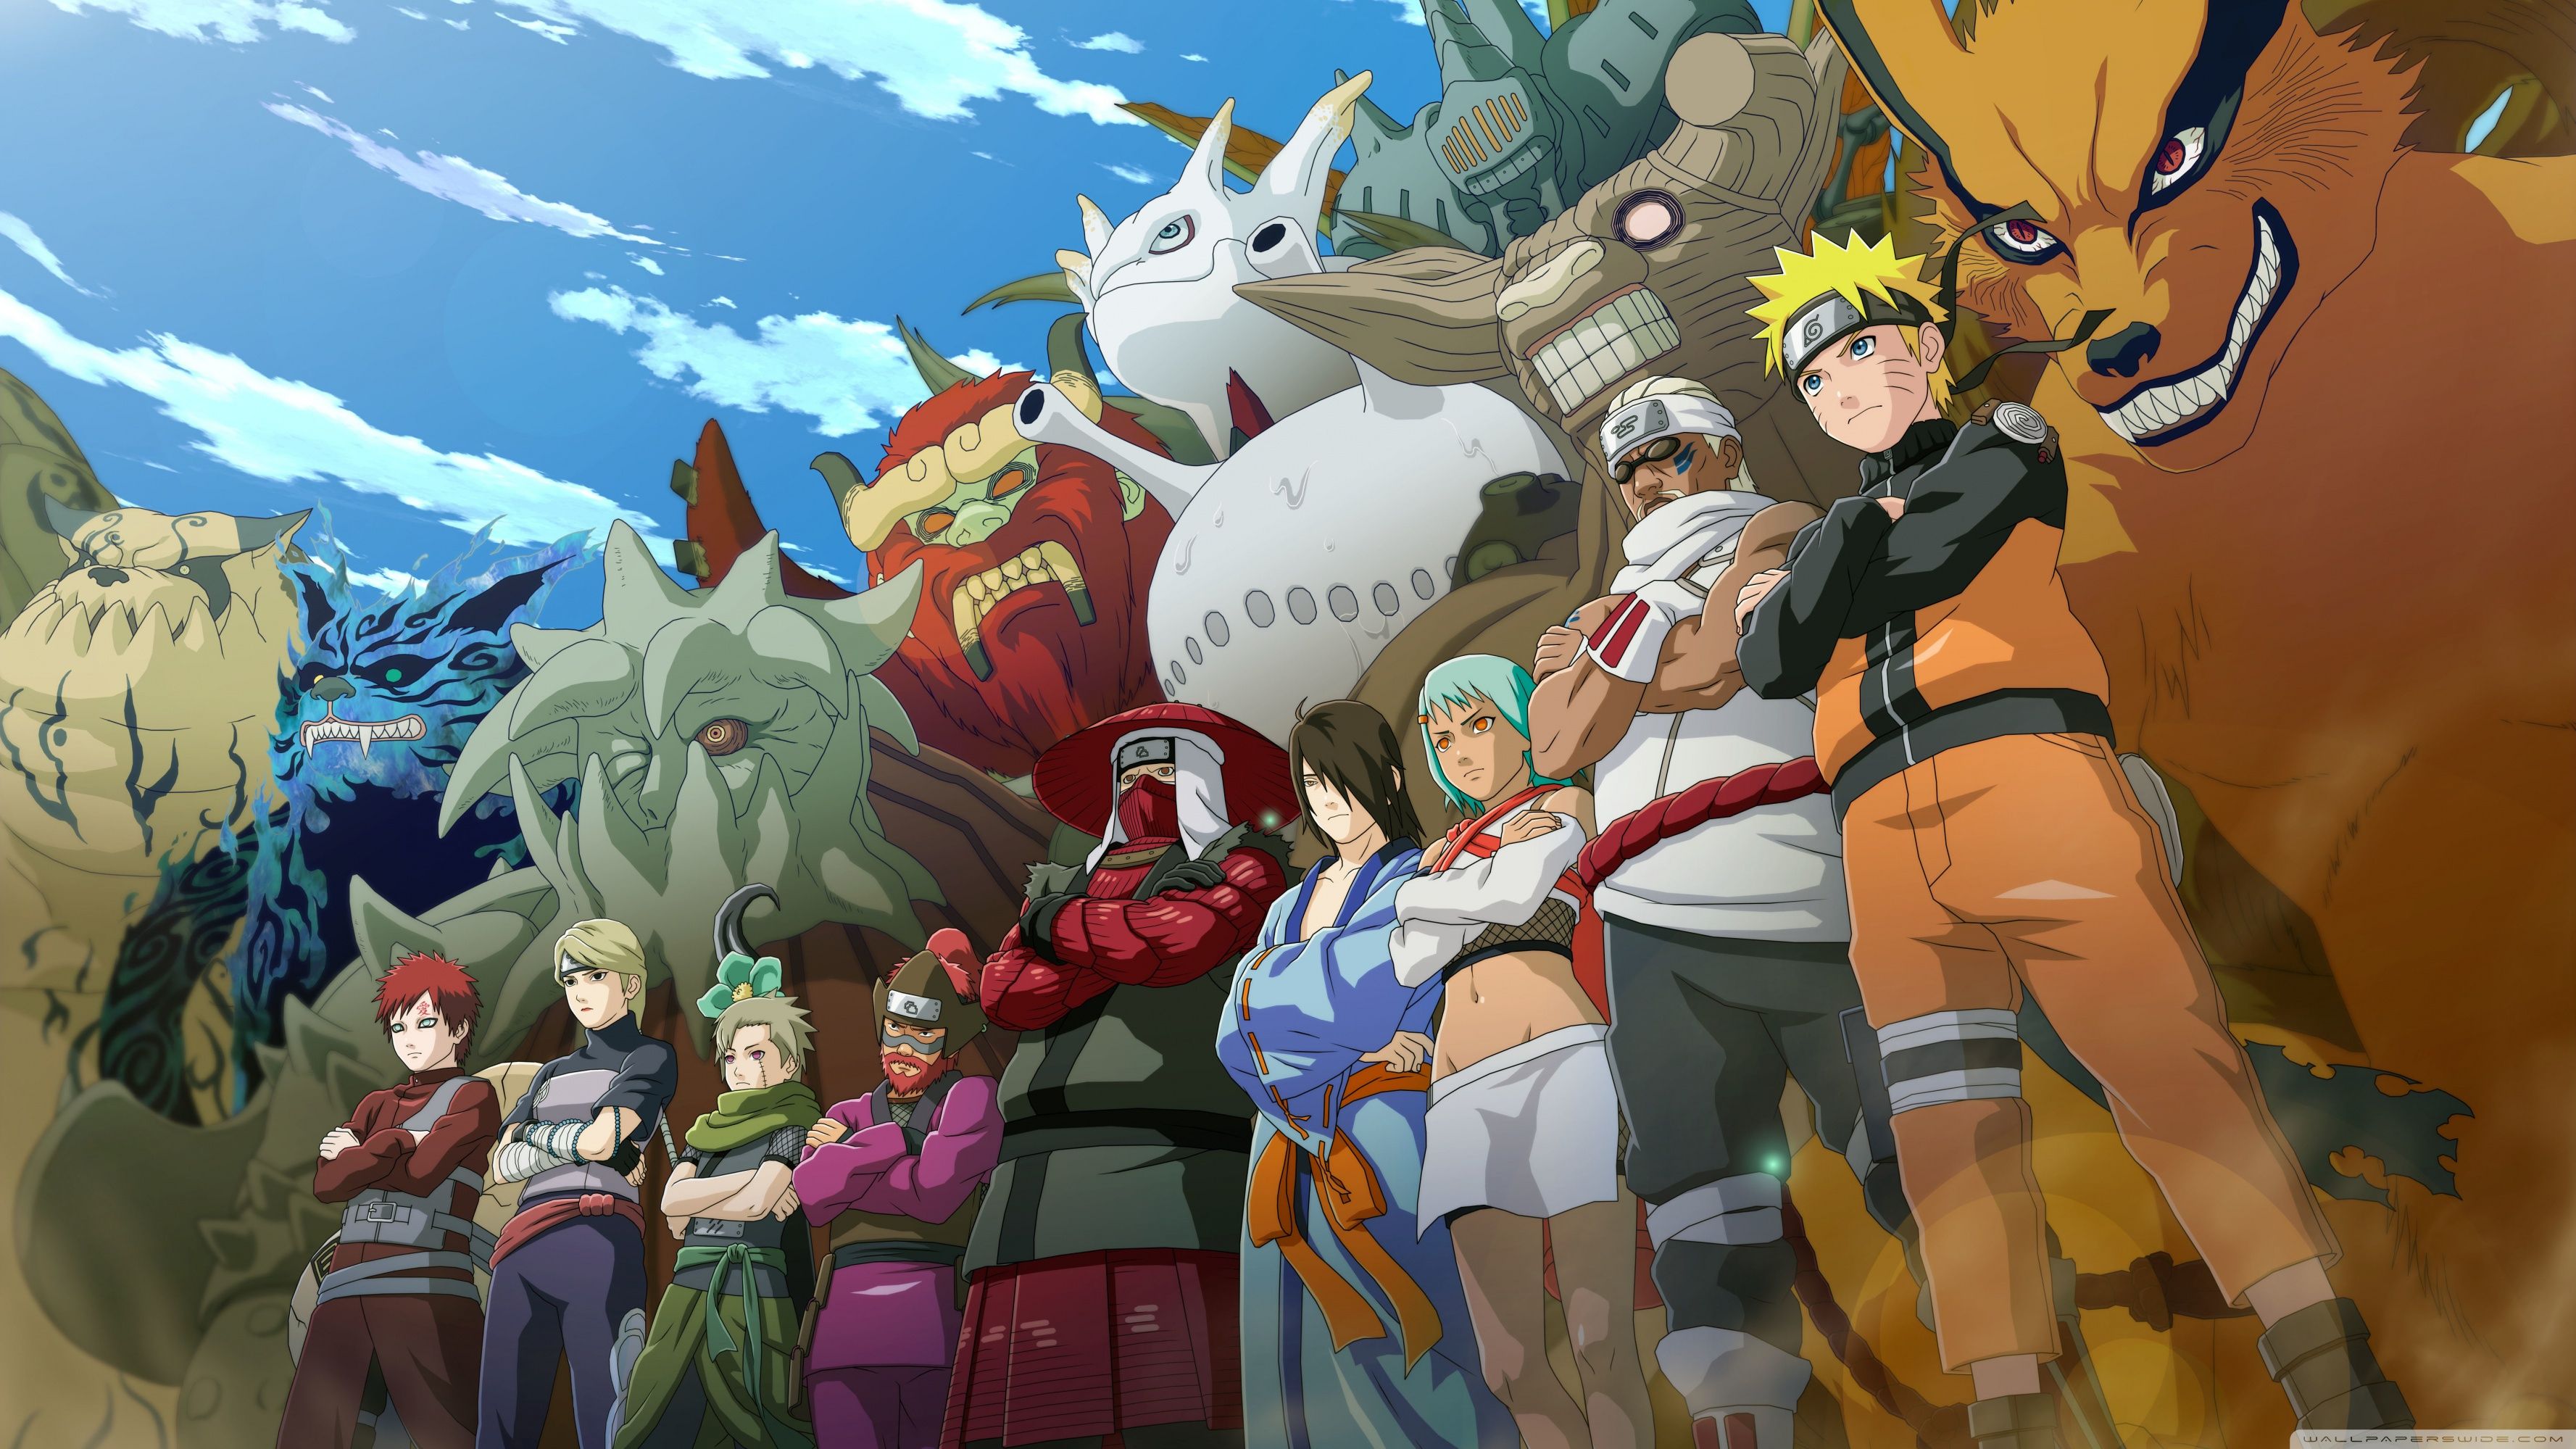 Naruto Shippuden #142 Official Preview Simulcast HD 